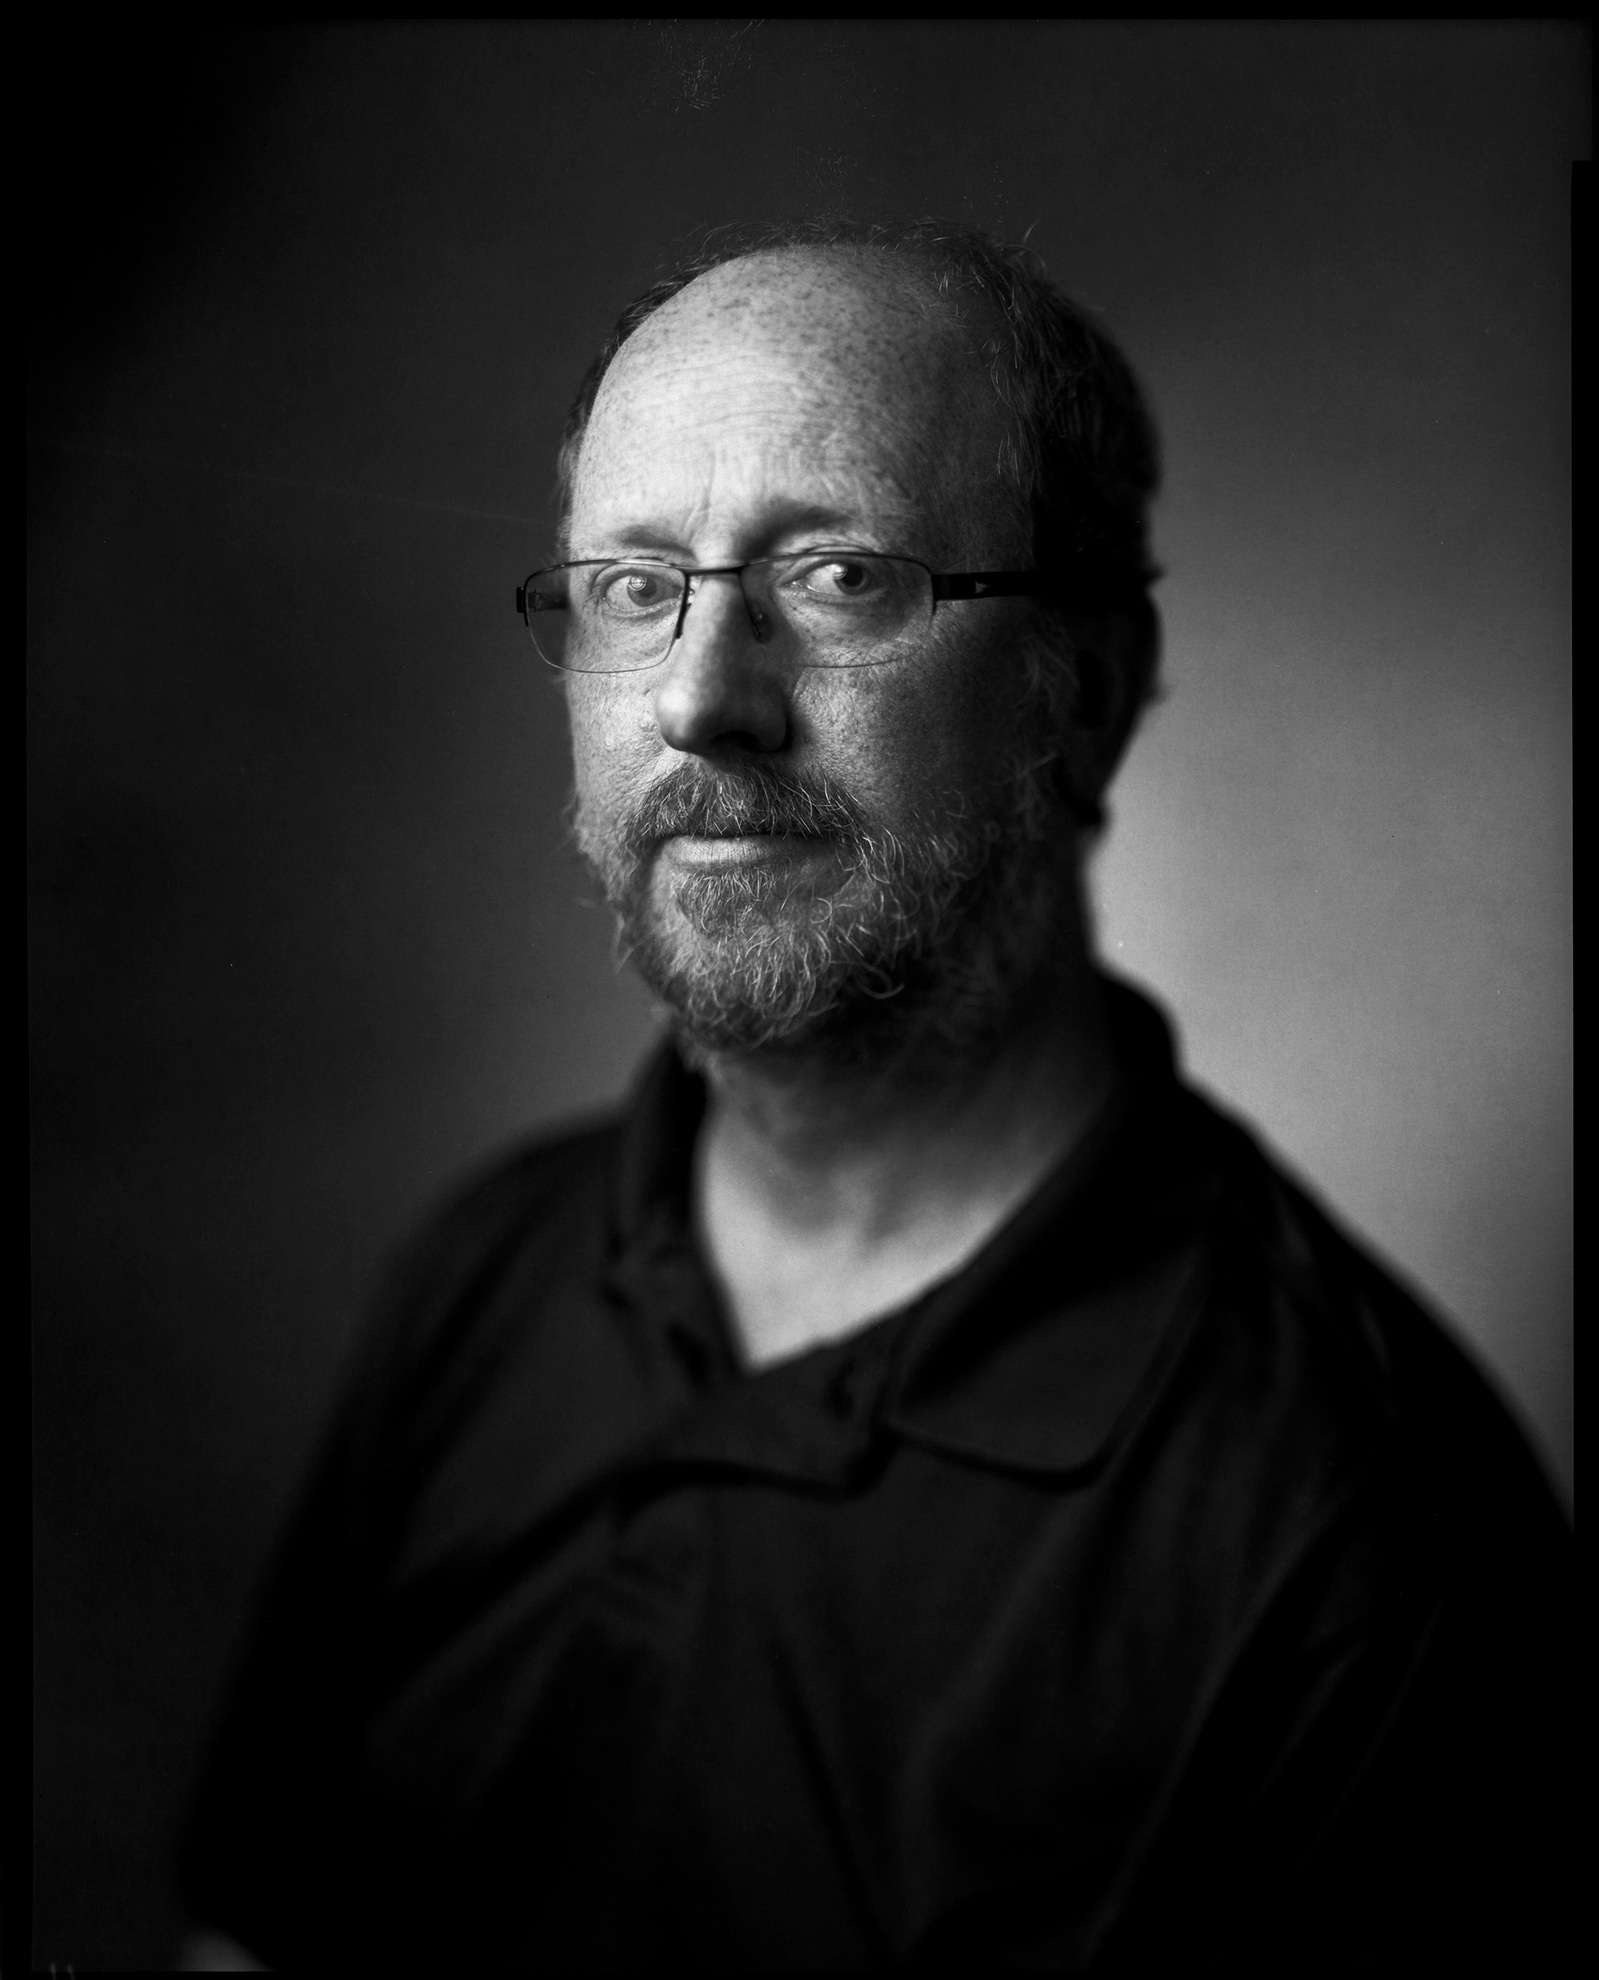 Large format paper negative self portrait of a man wearing glasses in studio setting.